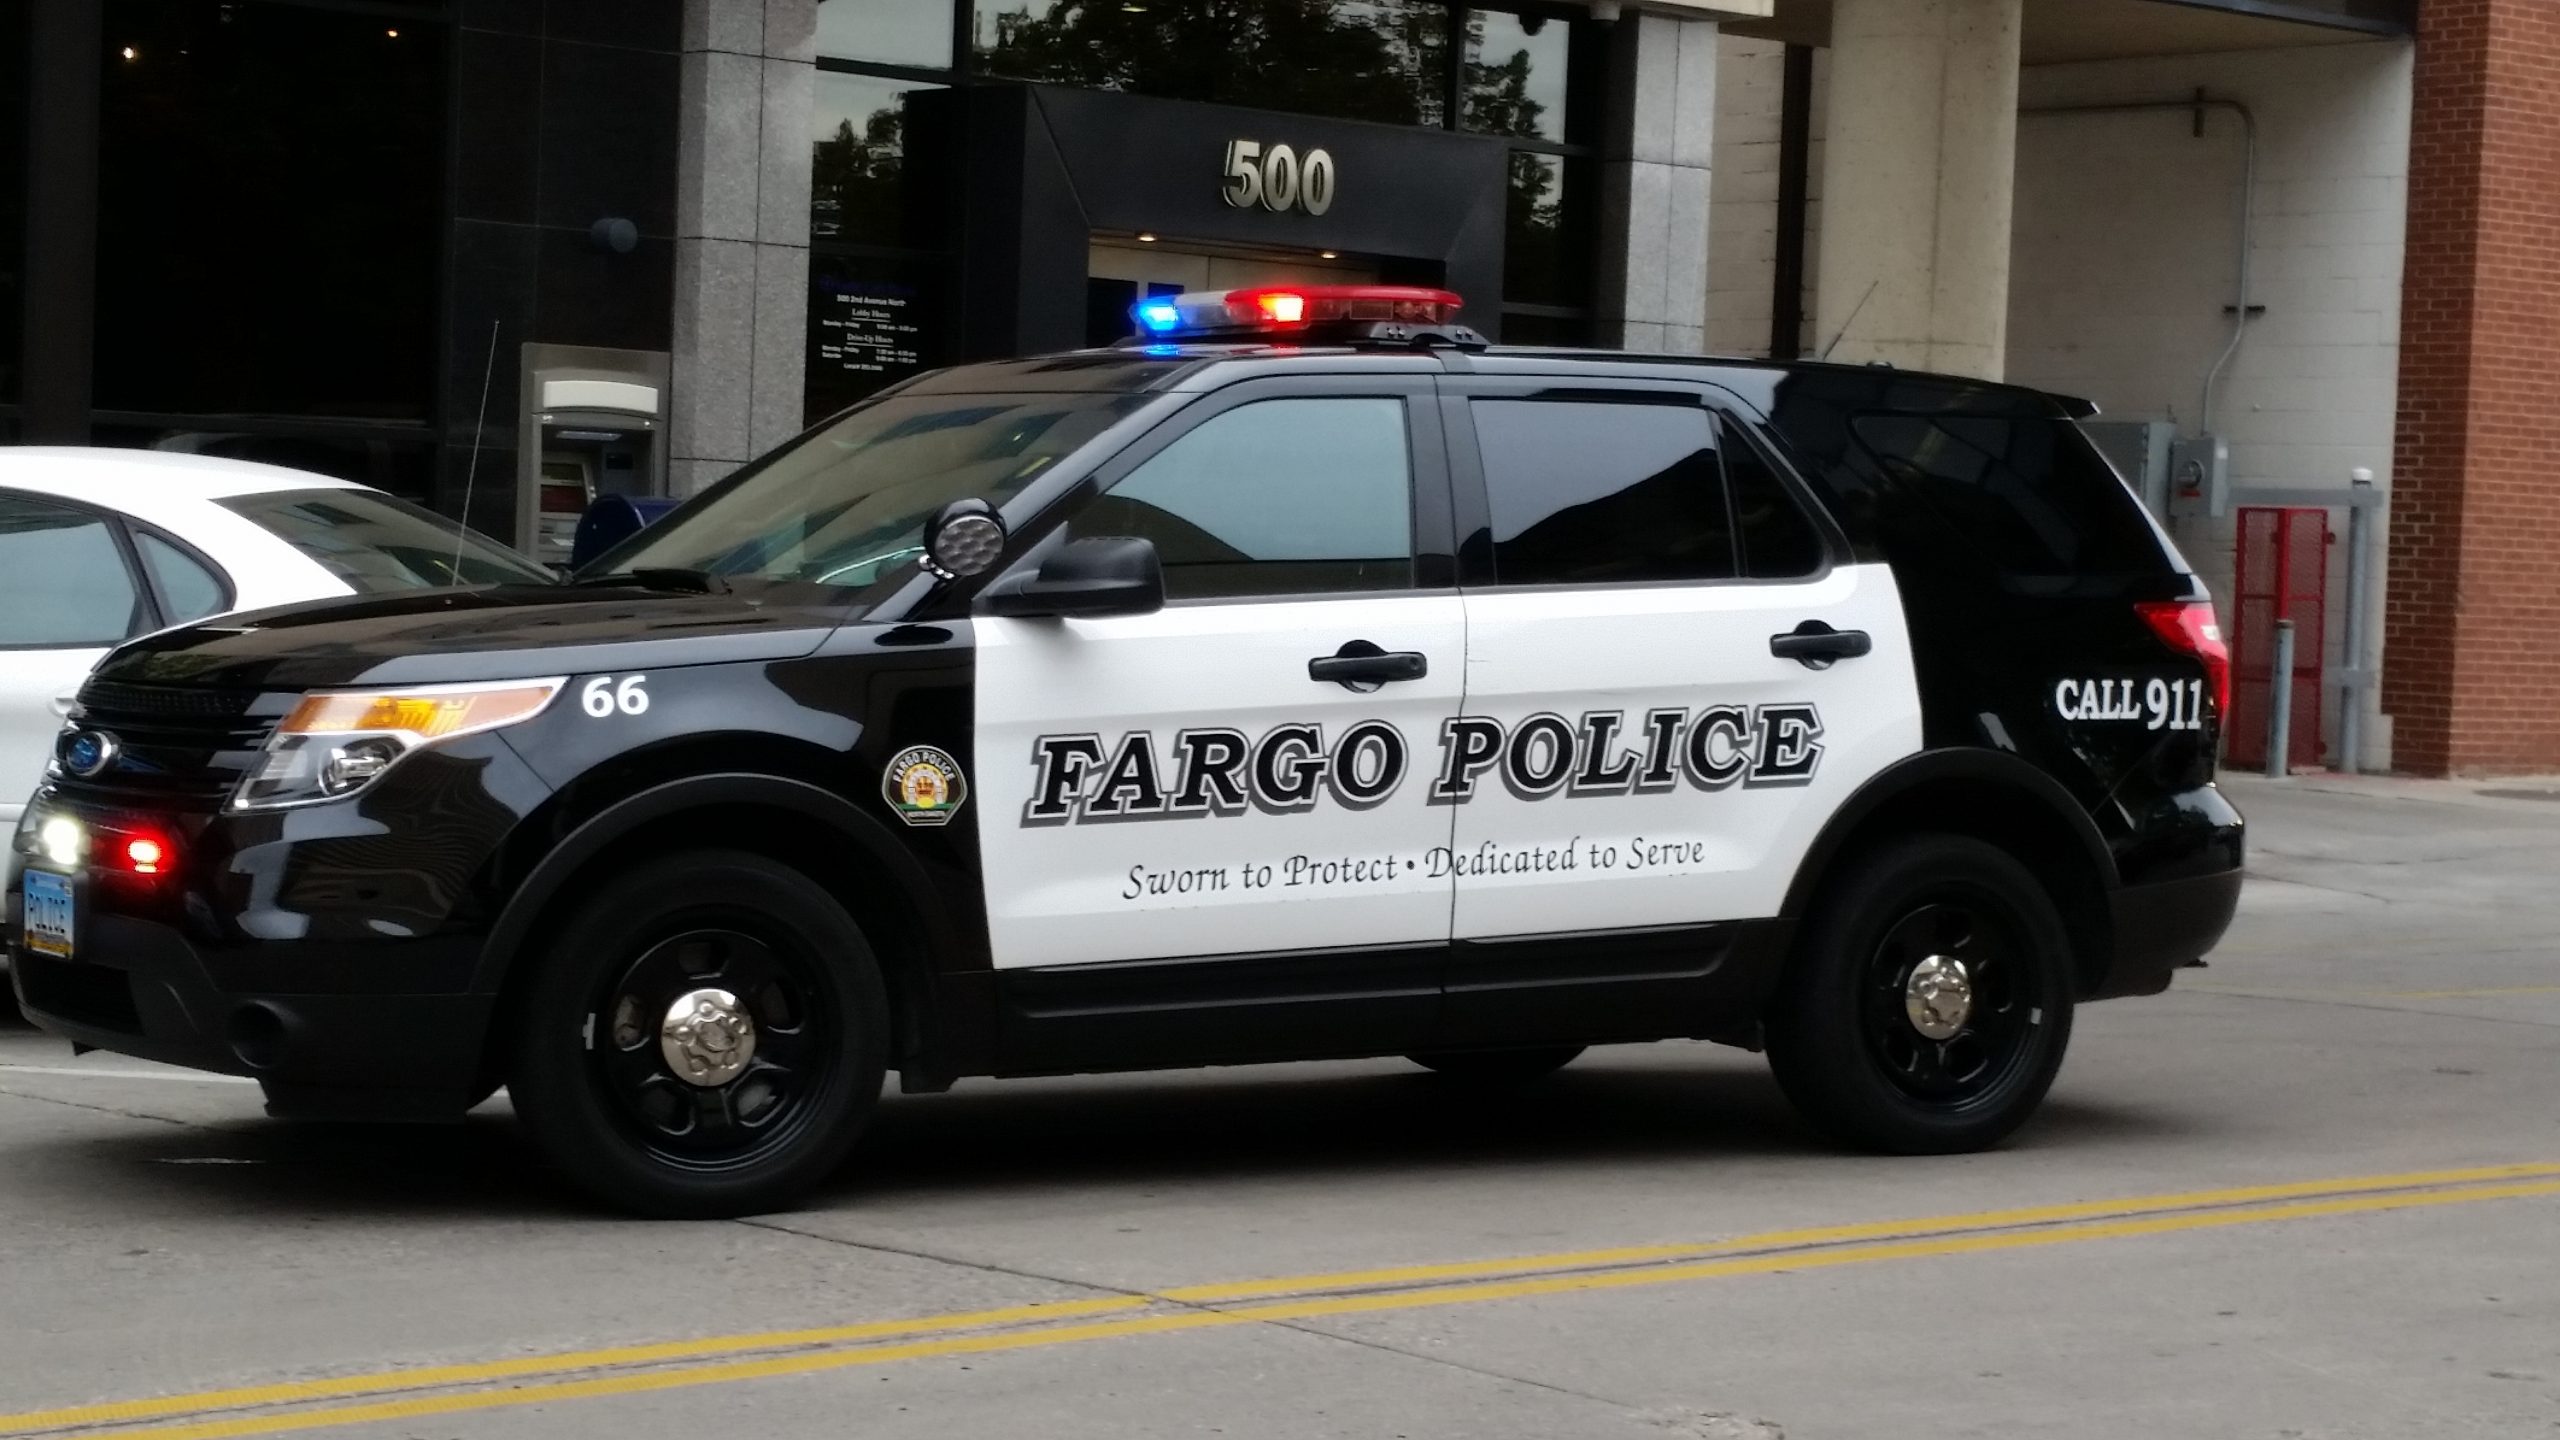 Dangerous suspect on the run in Fargo Metro Area